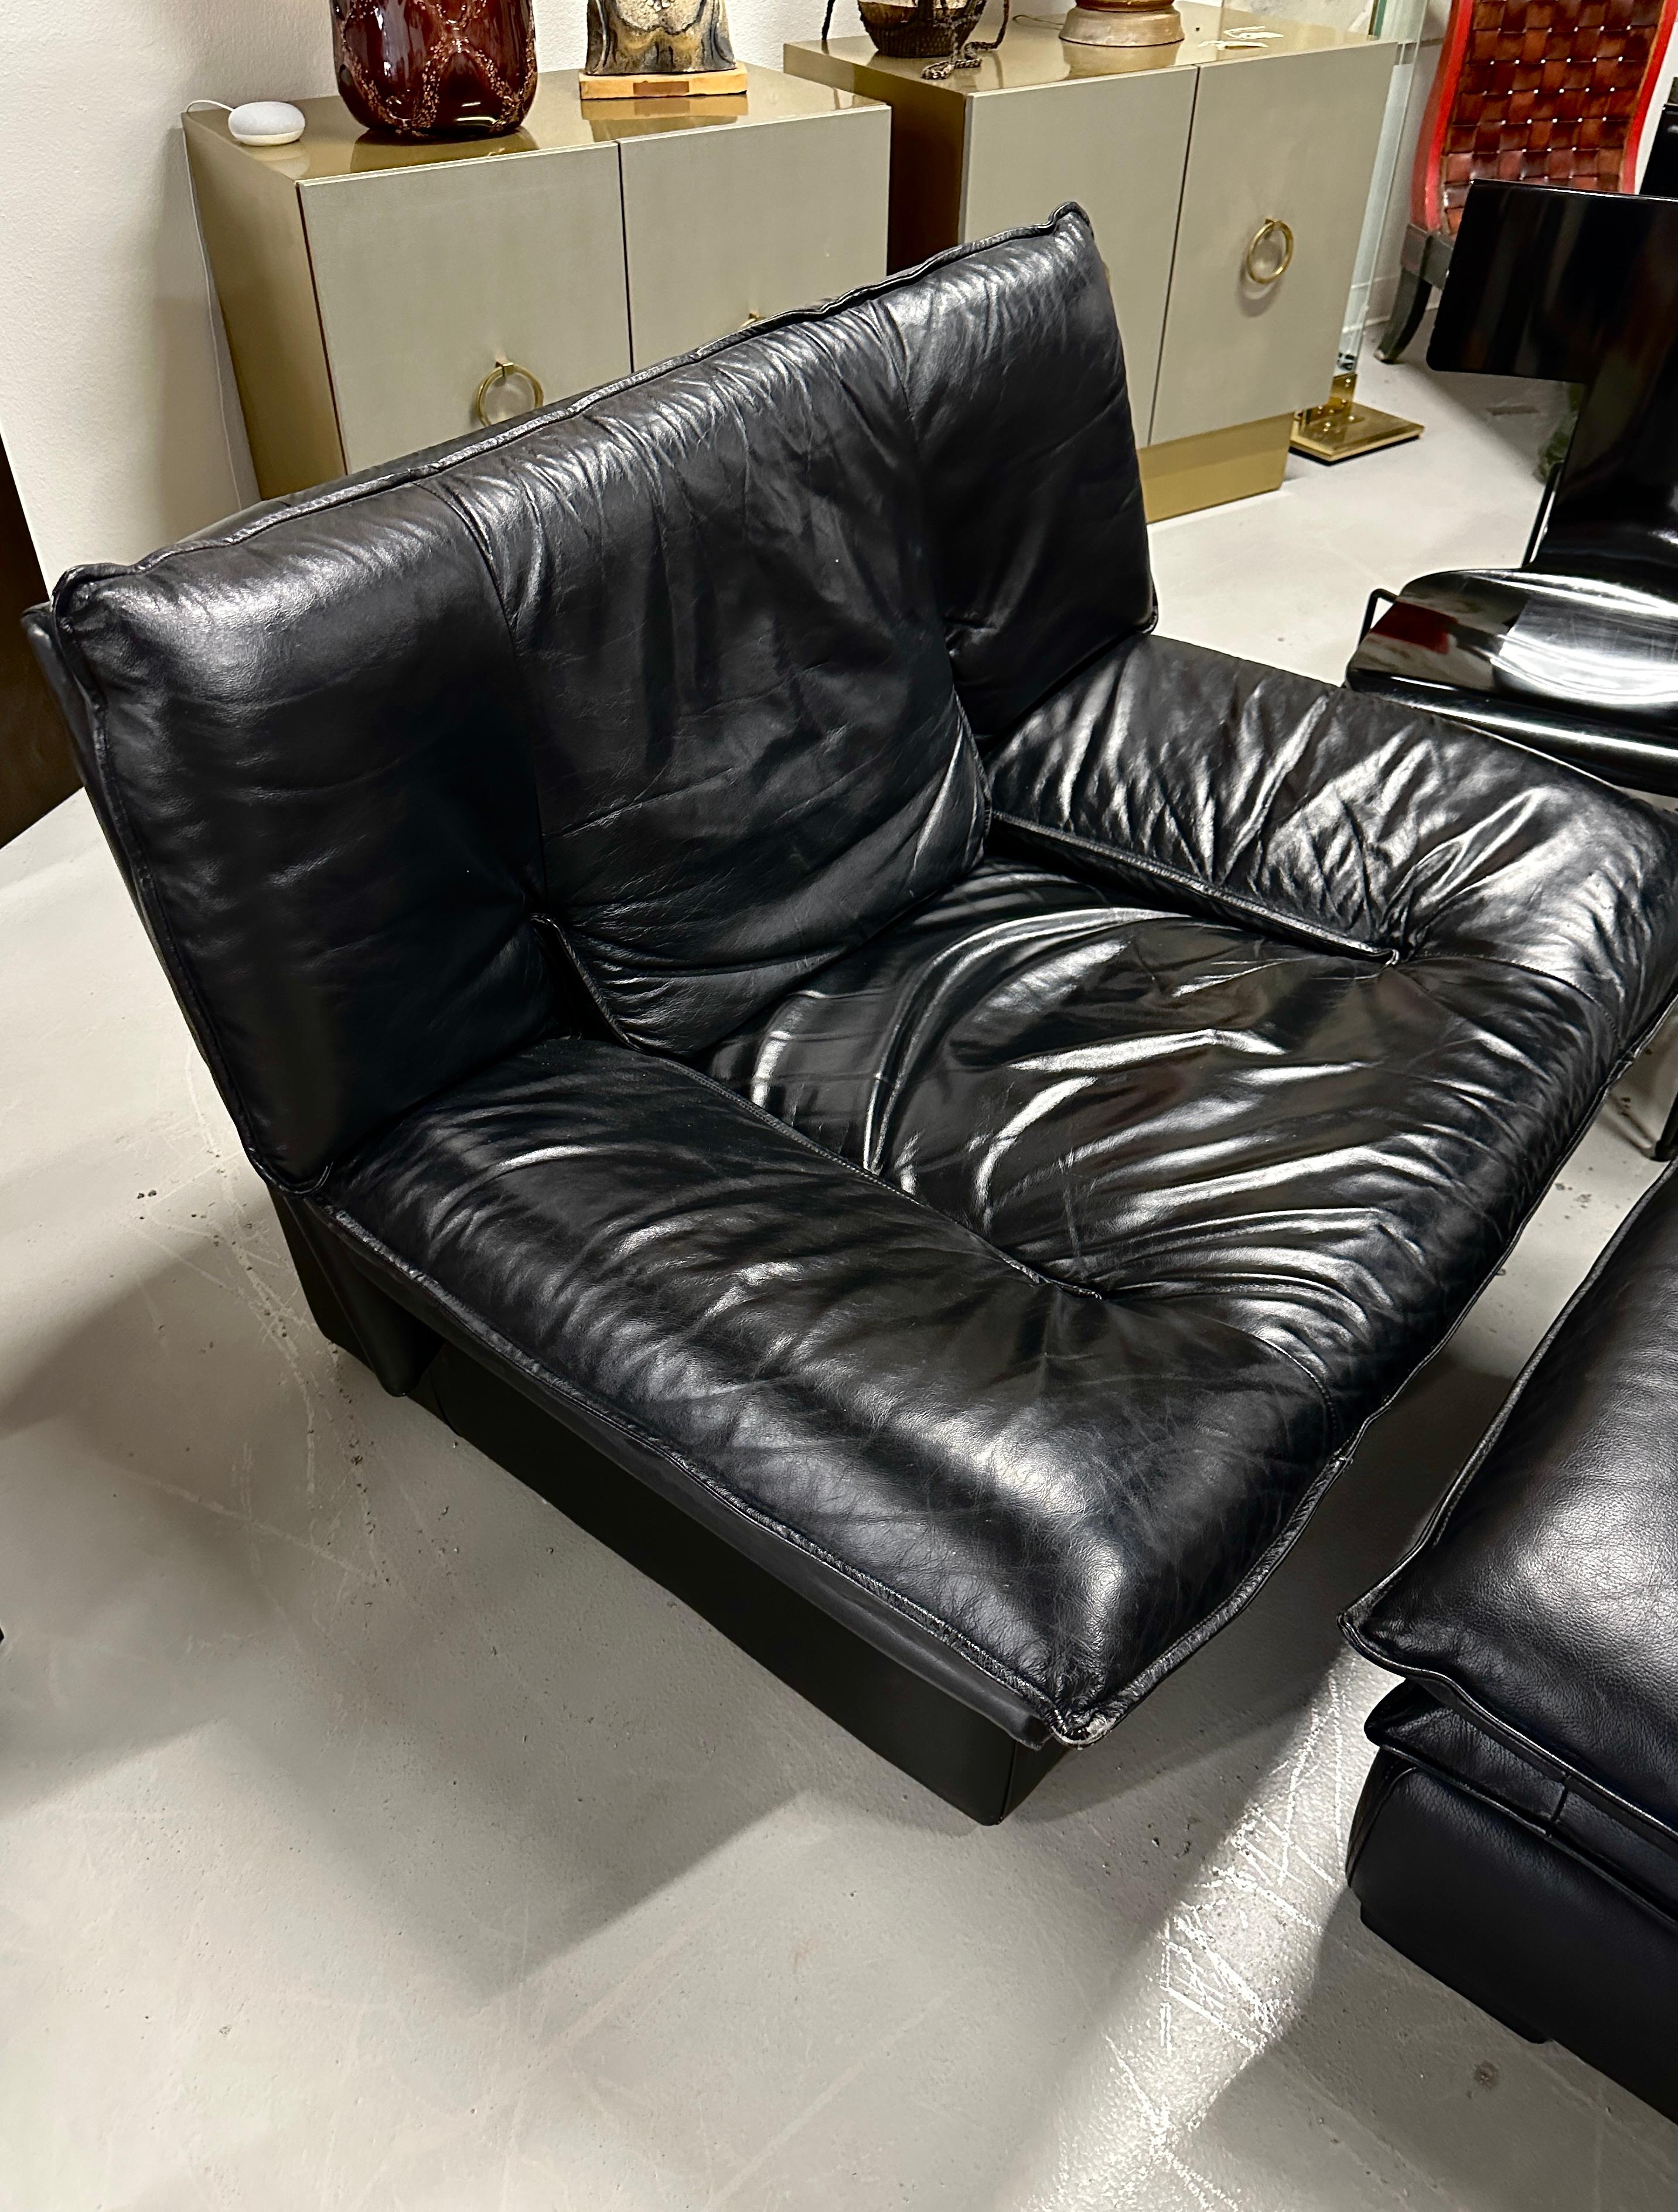 nicoletti leather chair